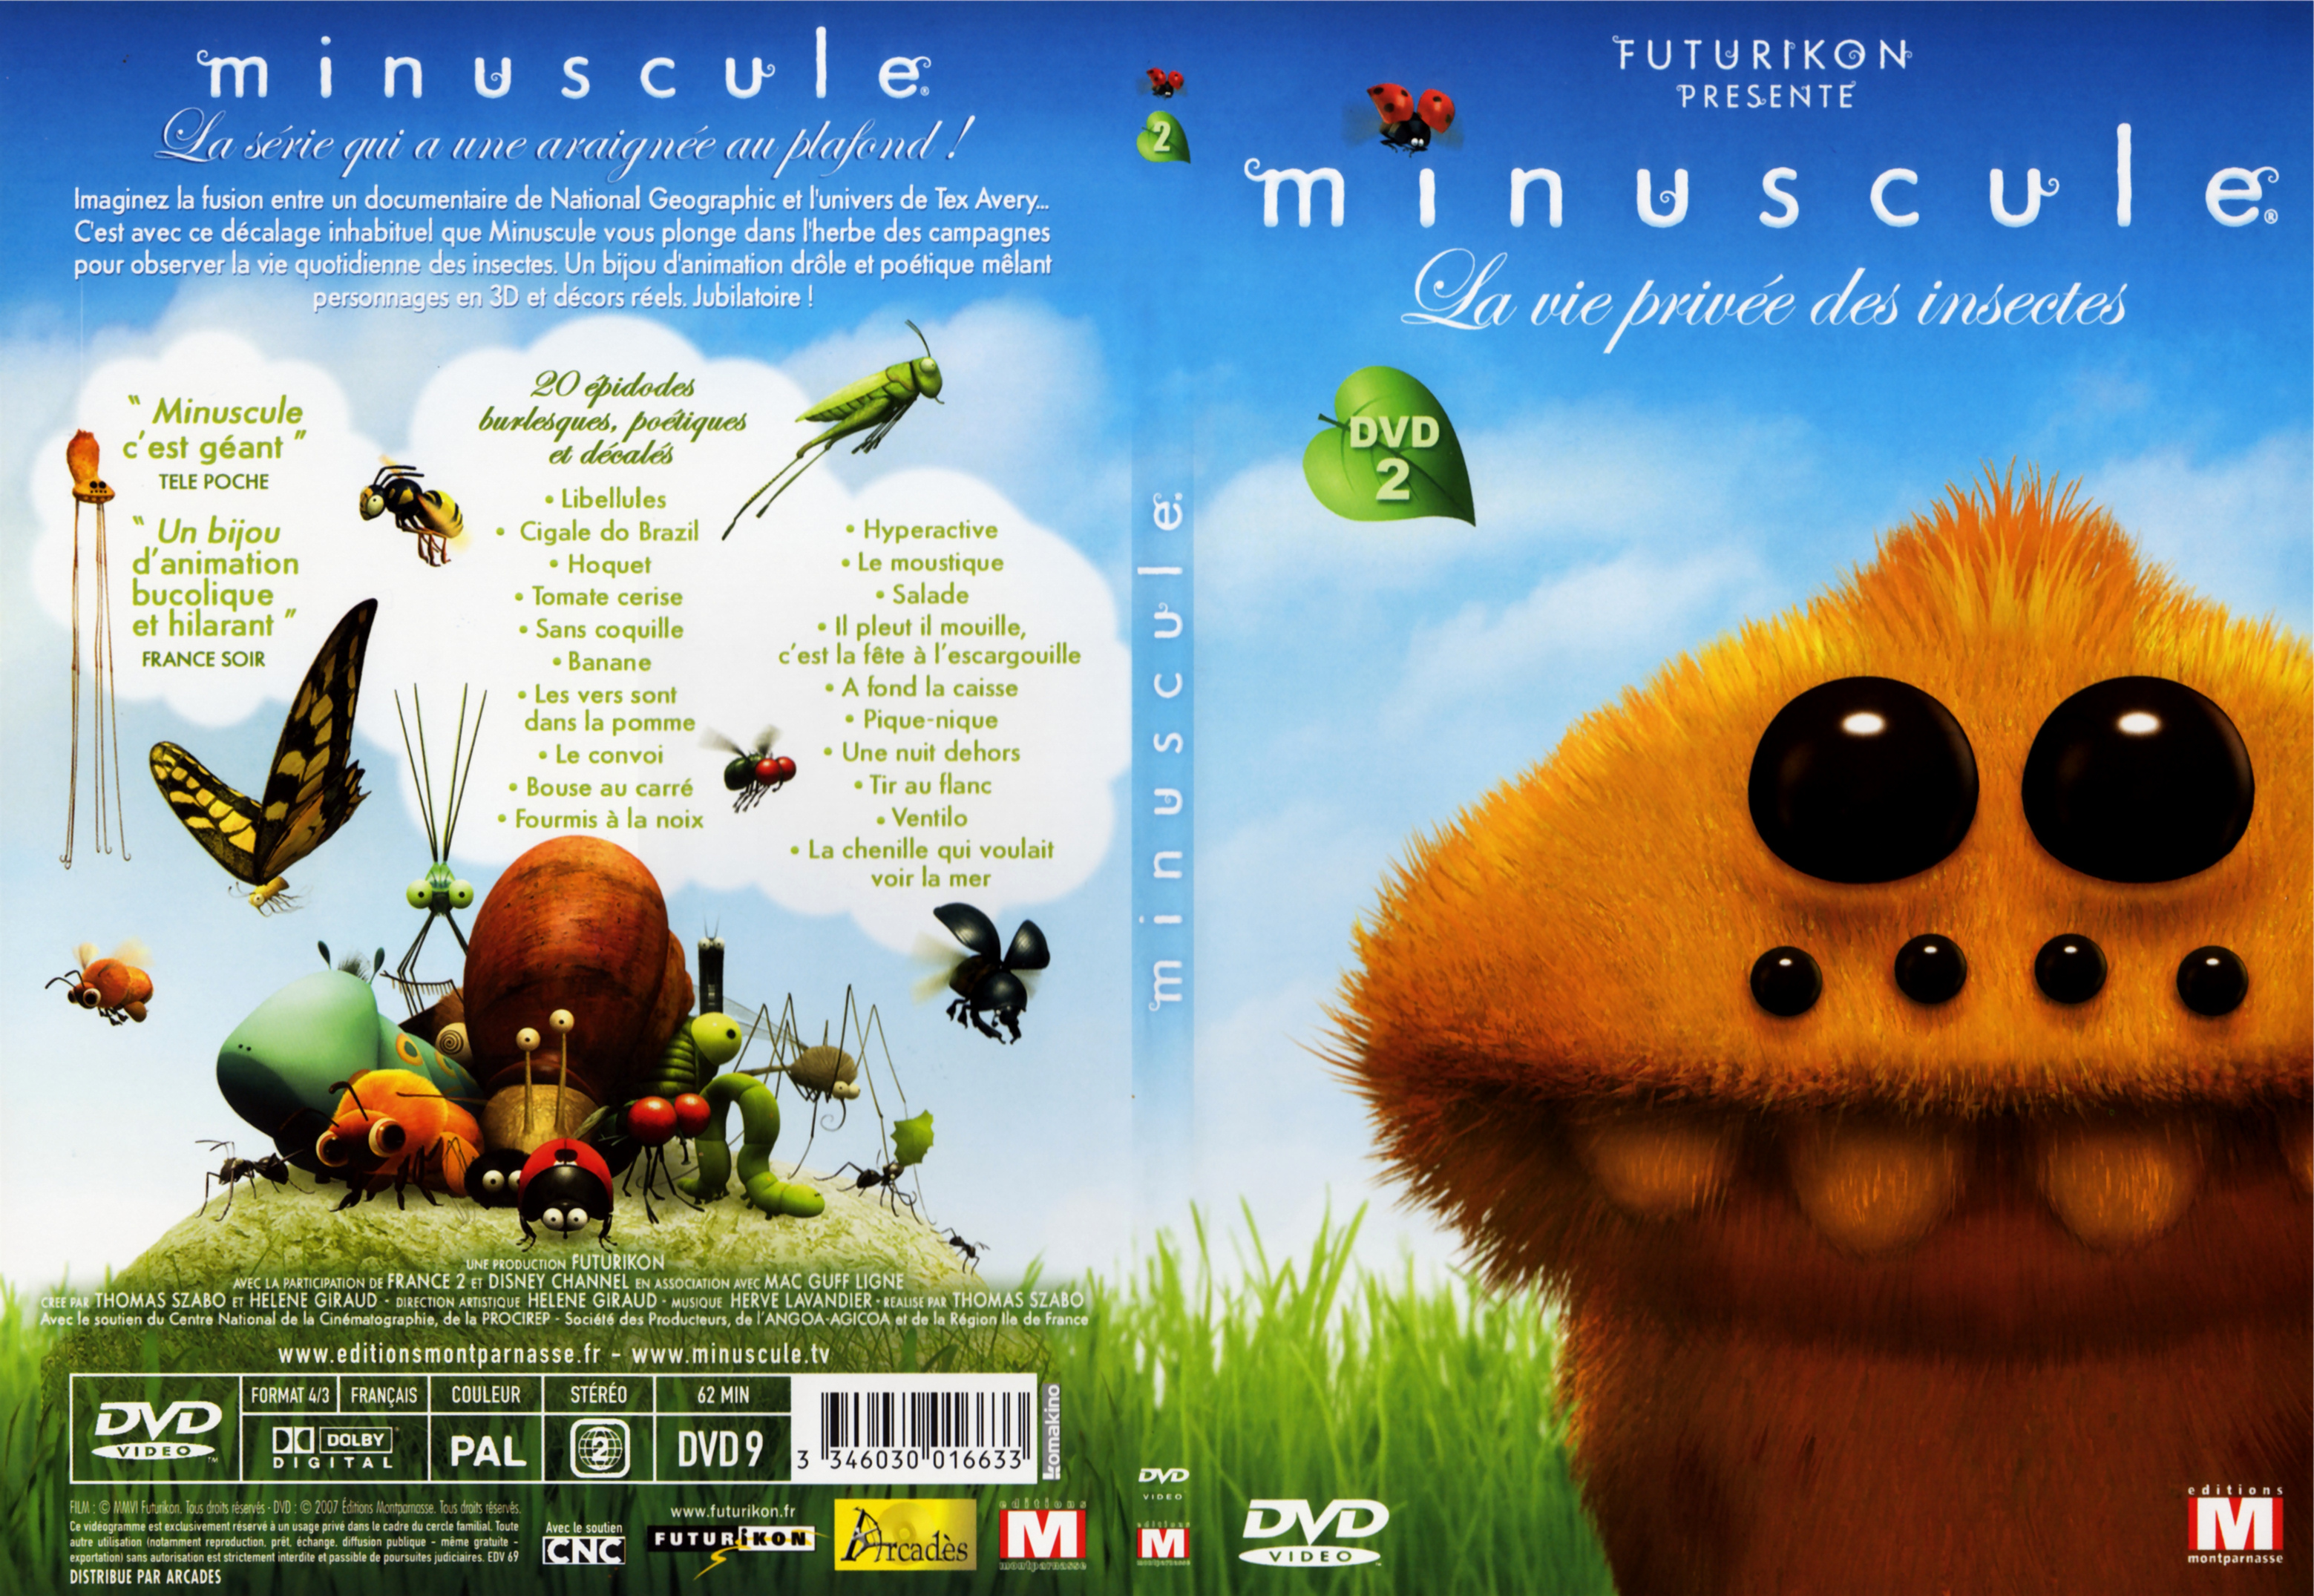 Jaquette DVD Minuscule DVD 2